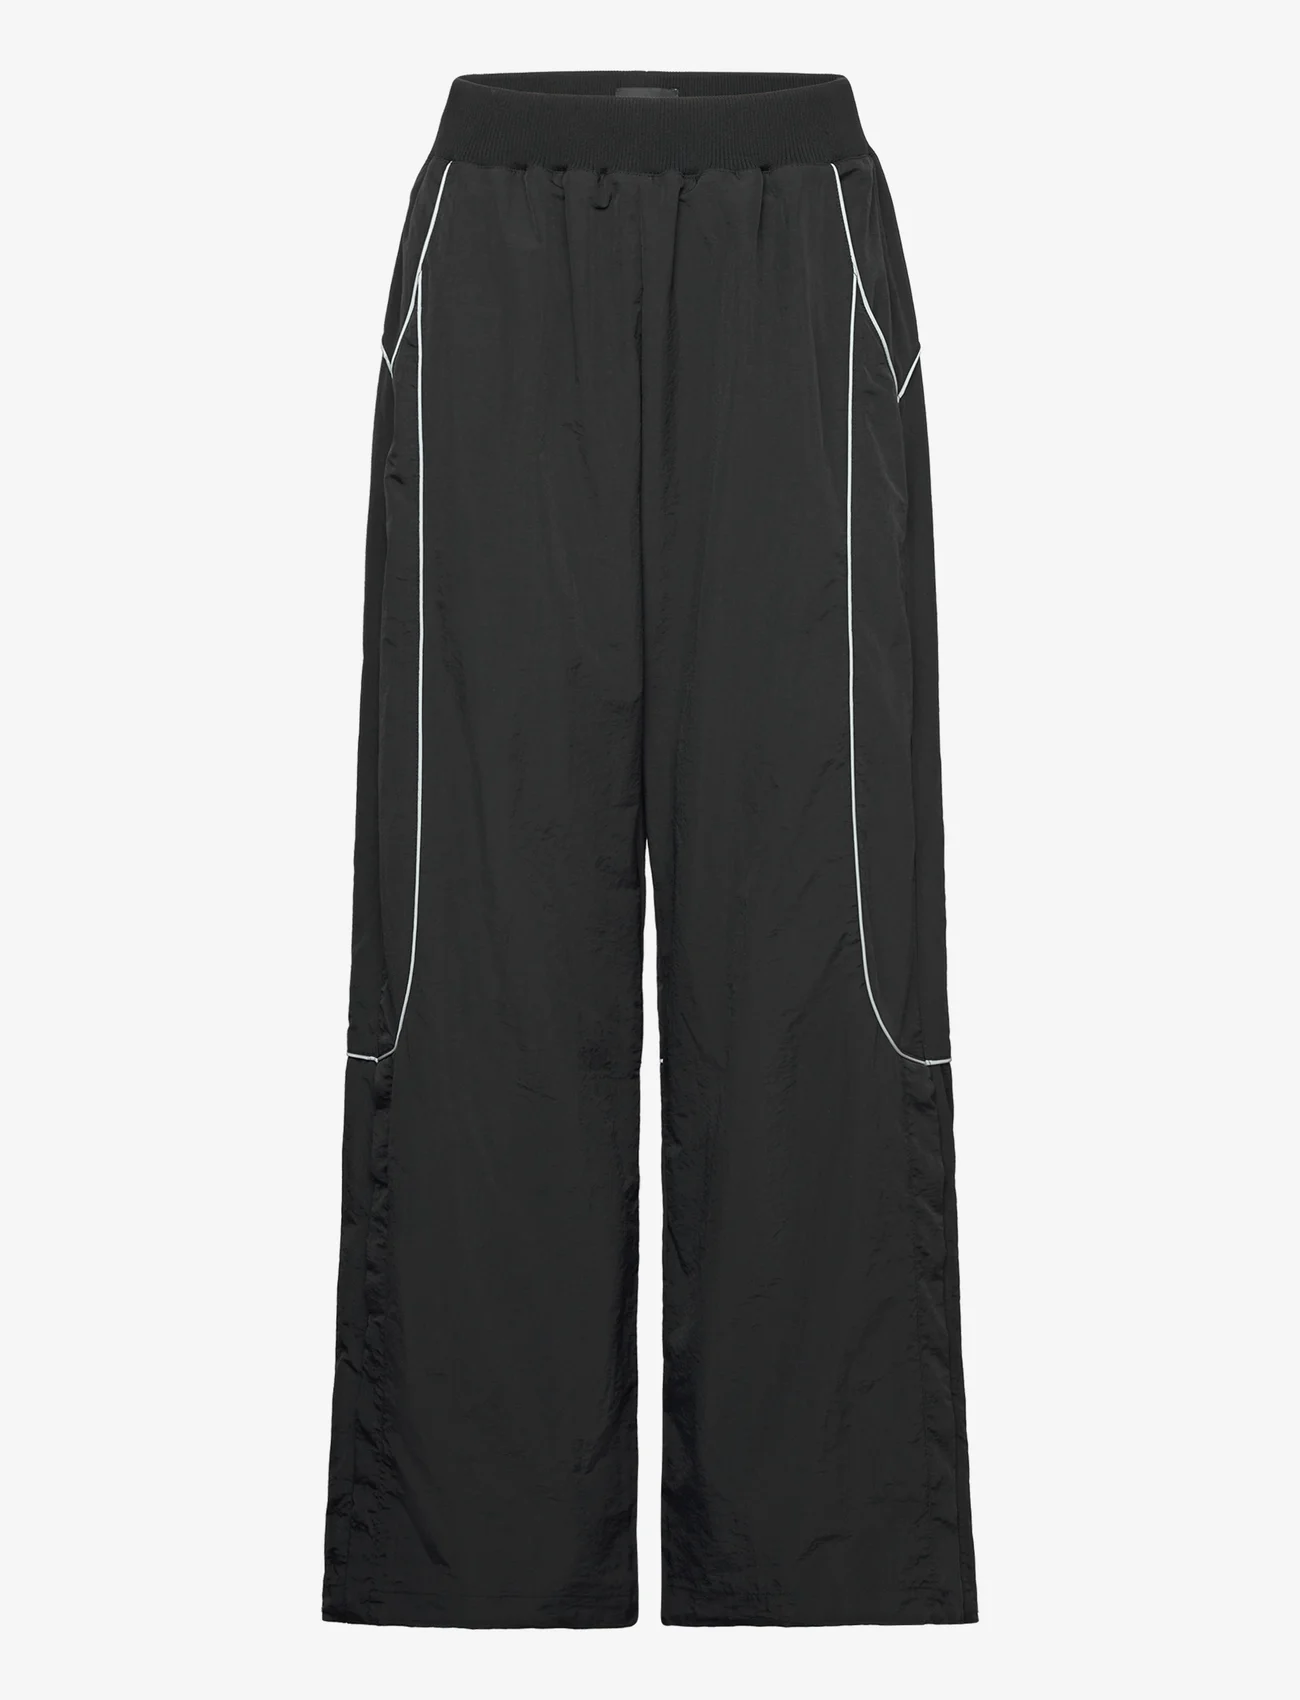 HAN Kjøbenhavn - Relaxed Track Trousers - apakšējais apģērbs - black - 0